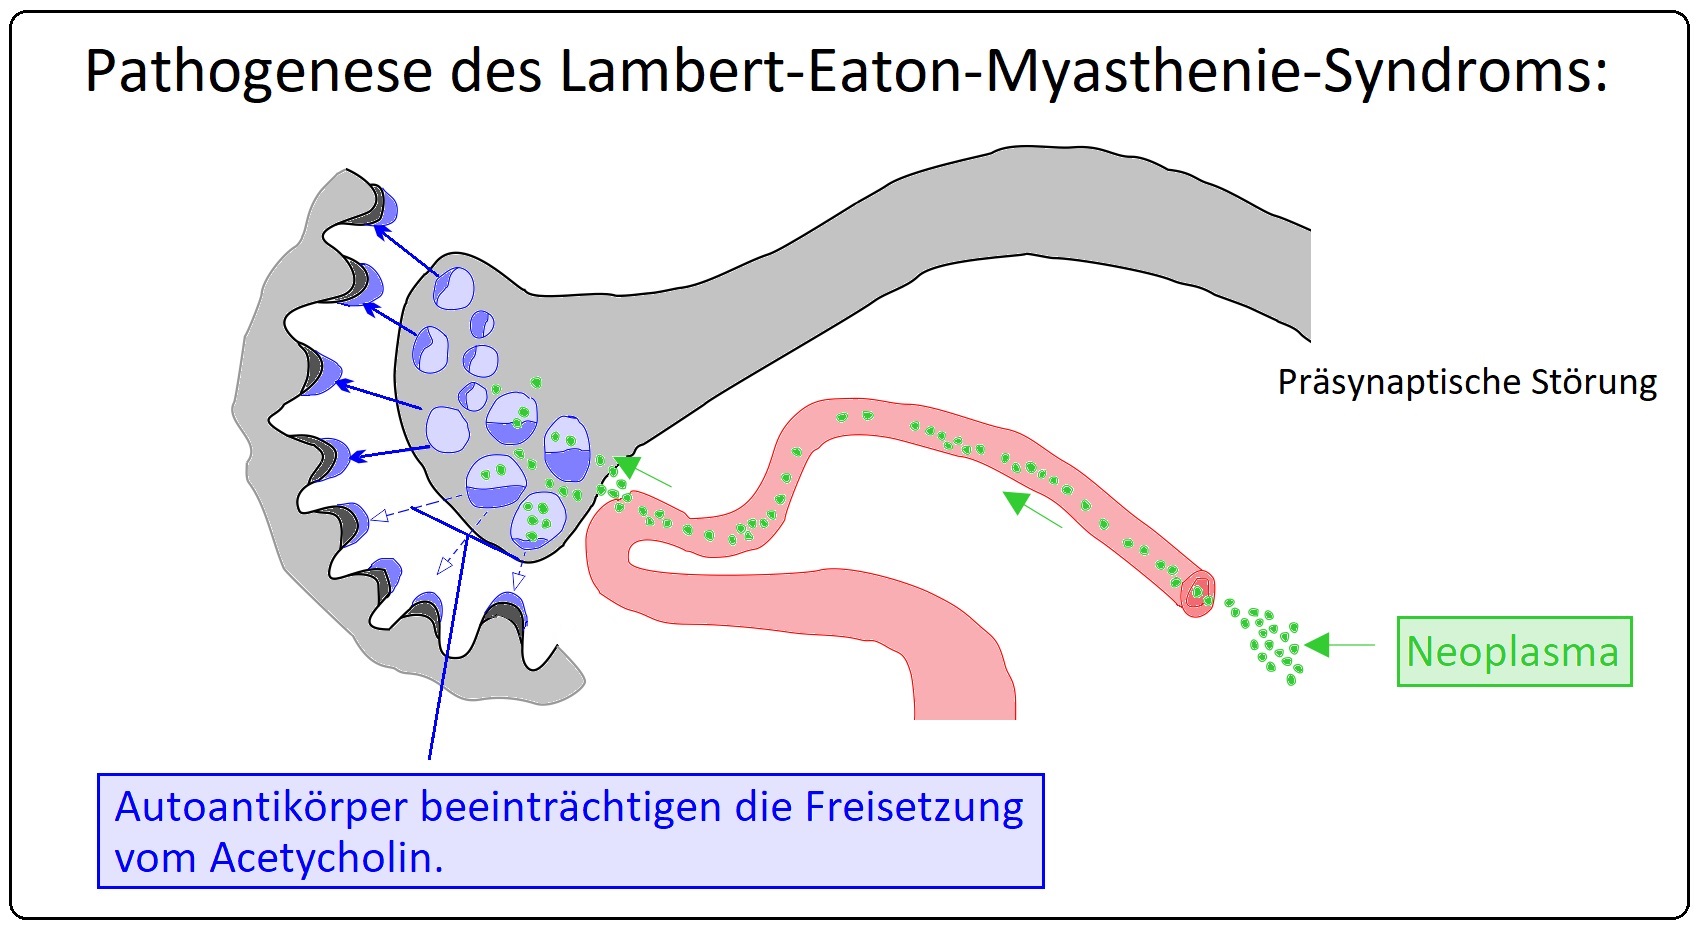 055 Pathogenese des Lambert Eaton Syndroms